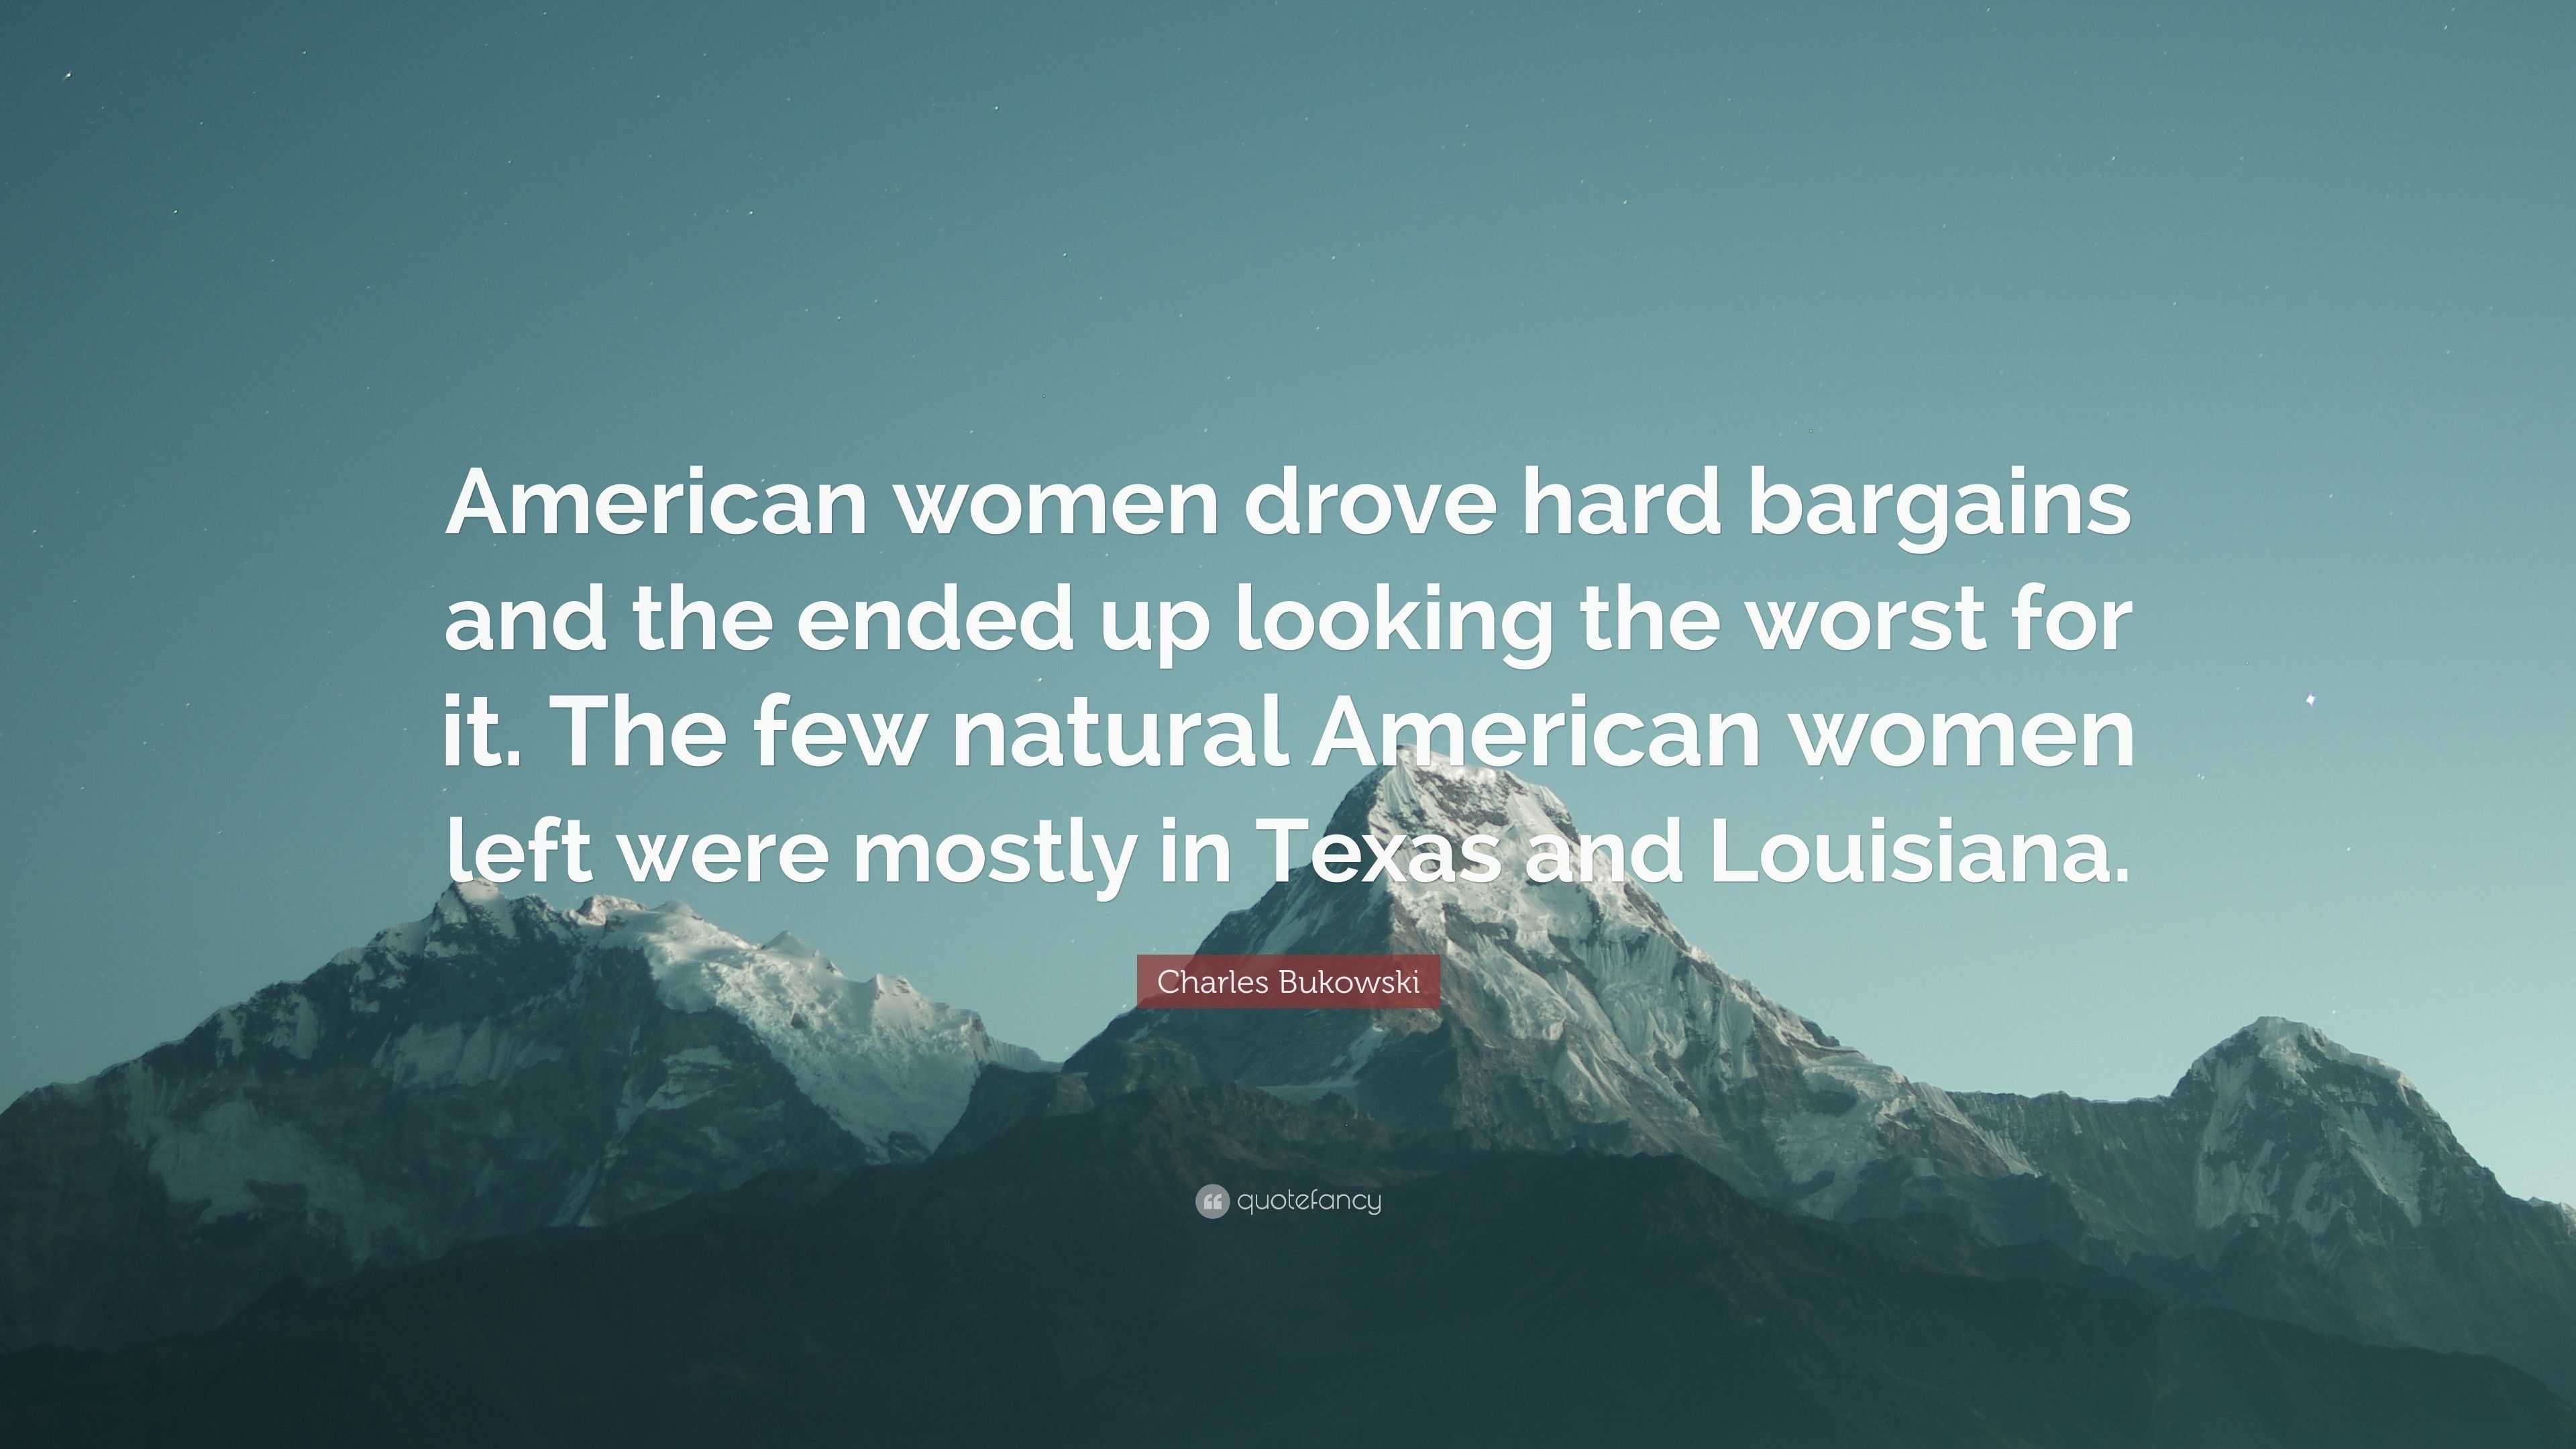 Charles Bukowski Quote: “American women drove hard bargains and